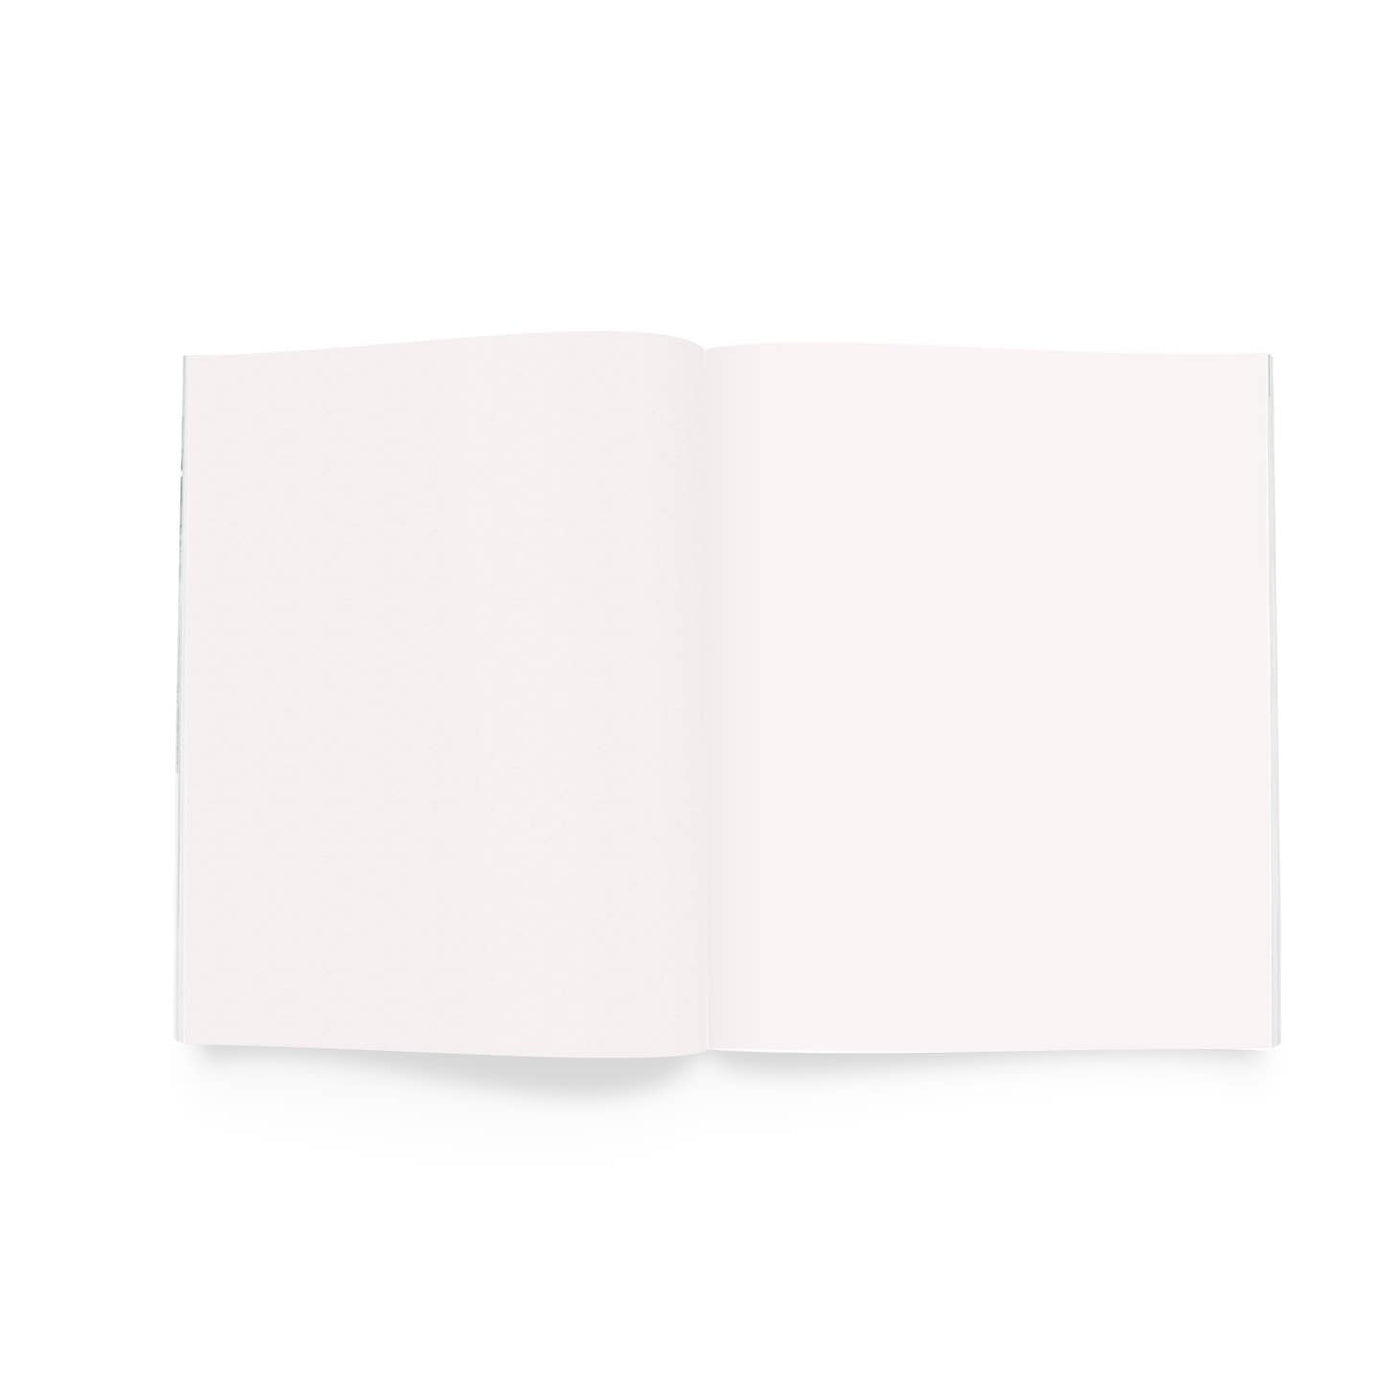 sample blank interior page of sketchbook